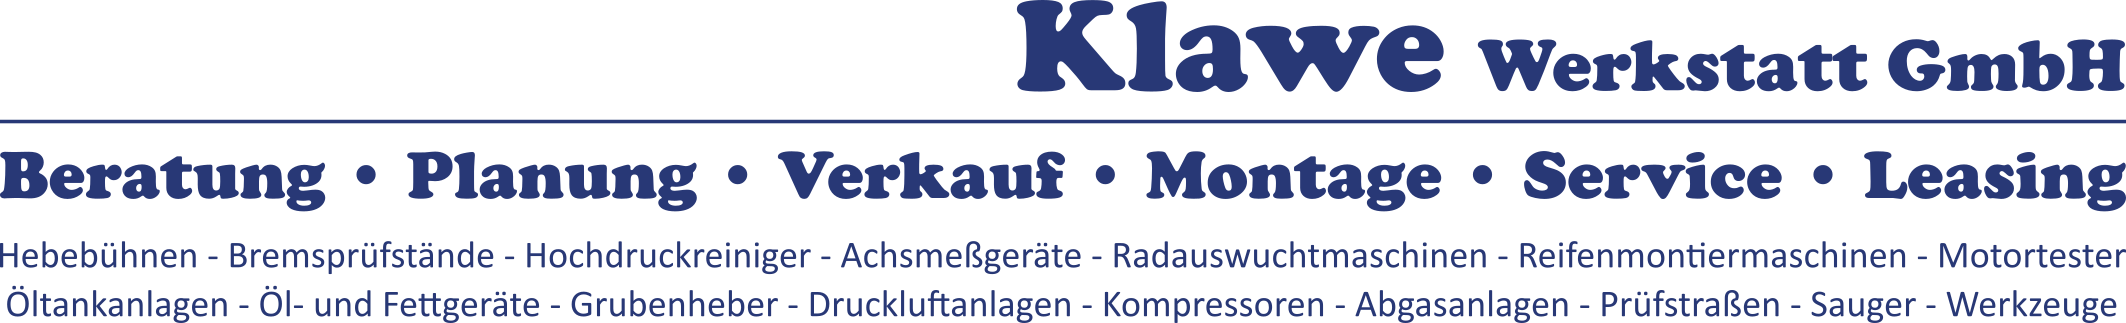 Klawe Werkstatt GmbH